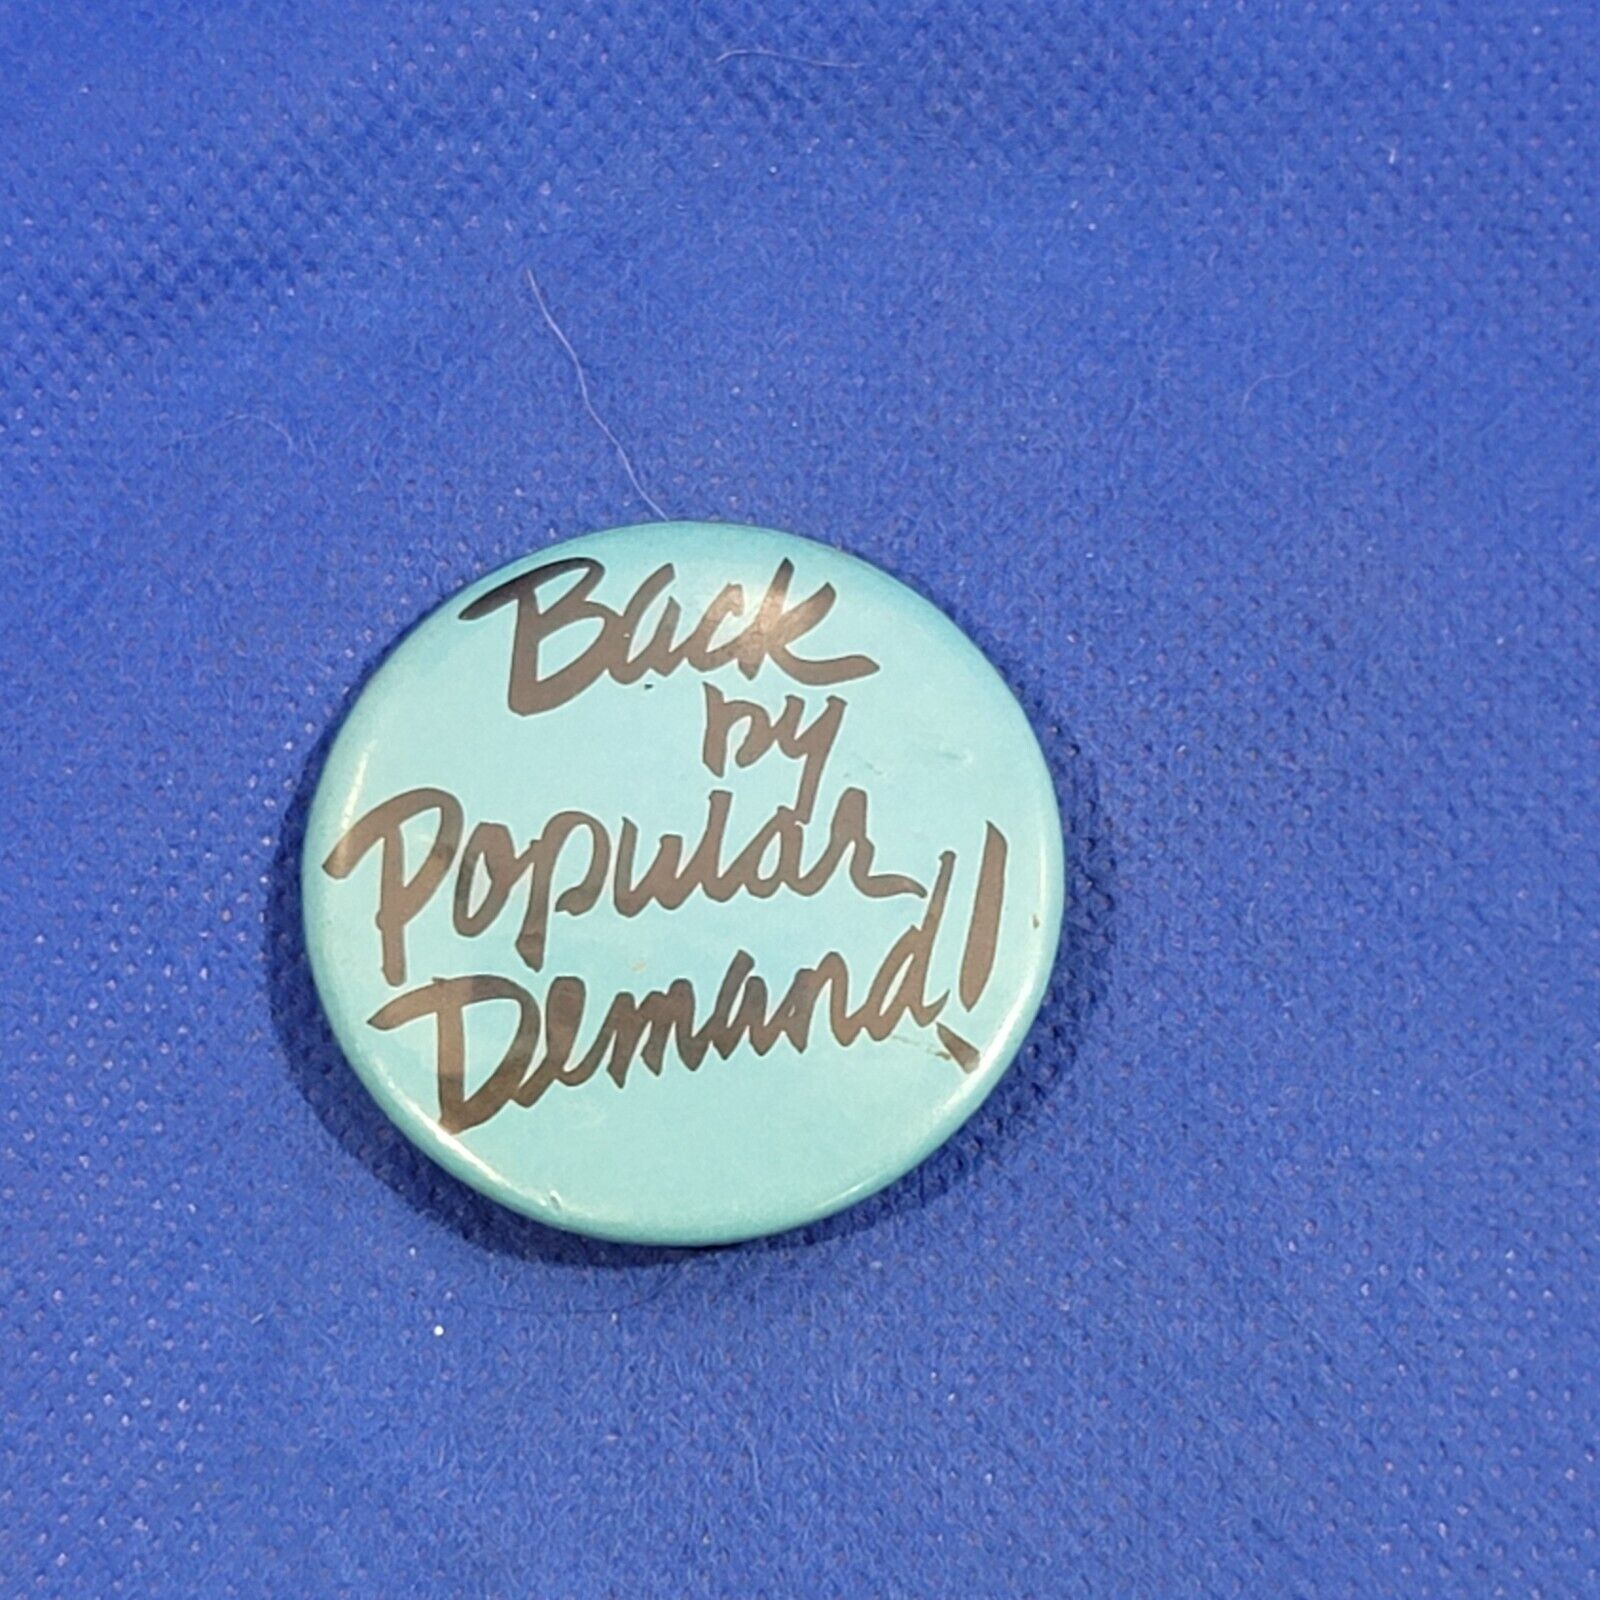 Back By Popular Demand Vintage Button Pinback